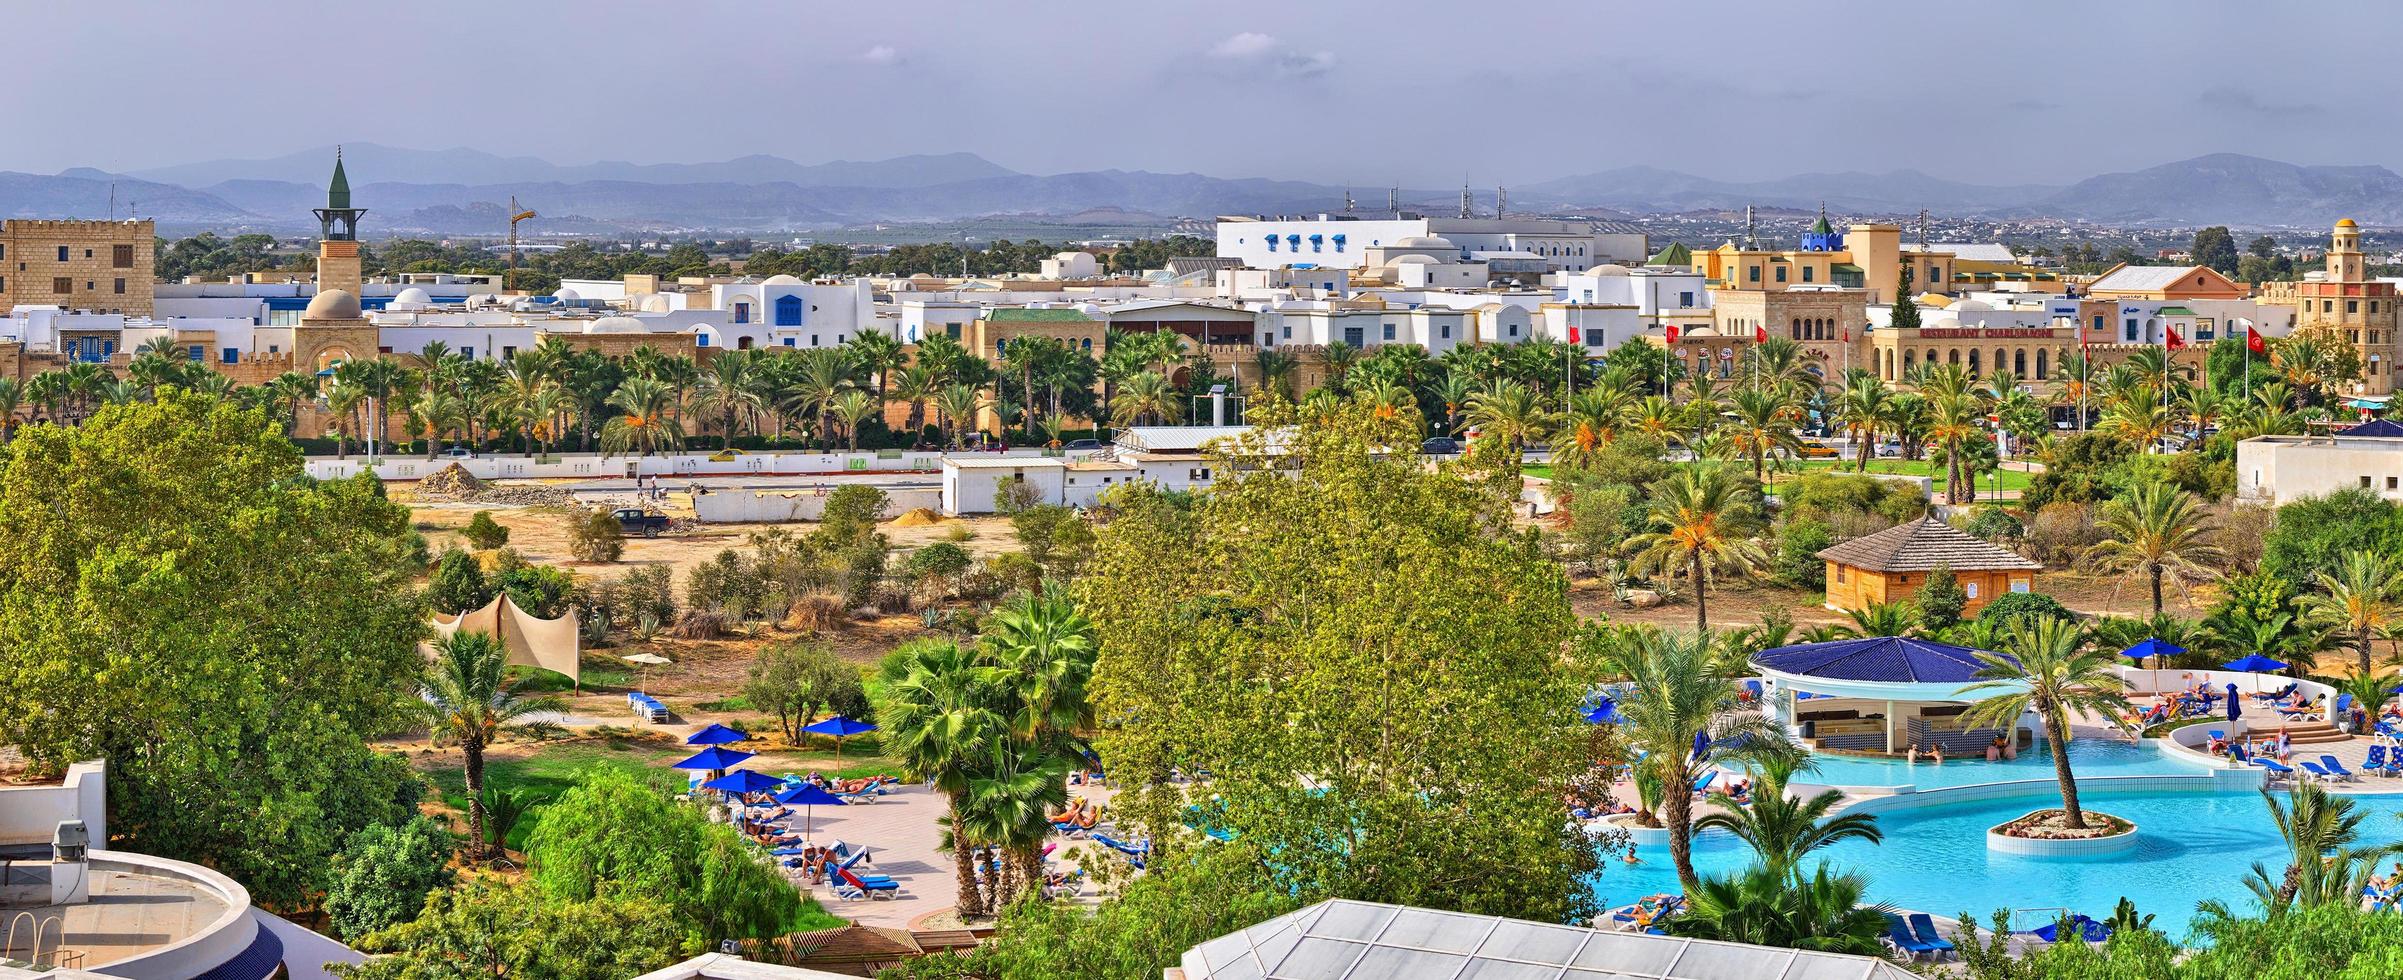 HAMMAMET, TUNISIA - OCT 2014 Swimming pool in luxury hotel on October 10, 2014 in Hammamet, Tunisia photo